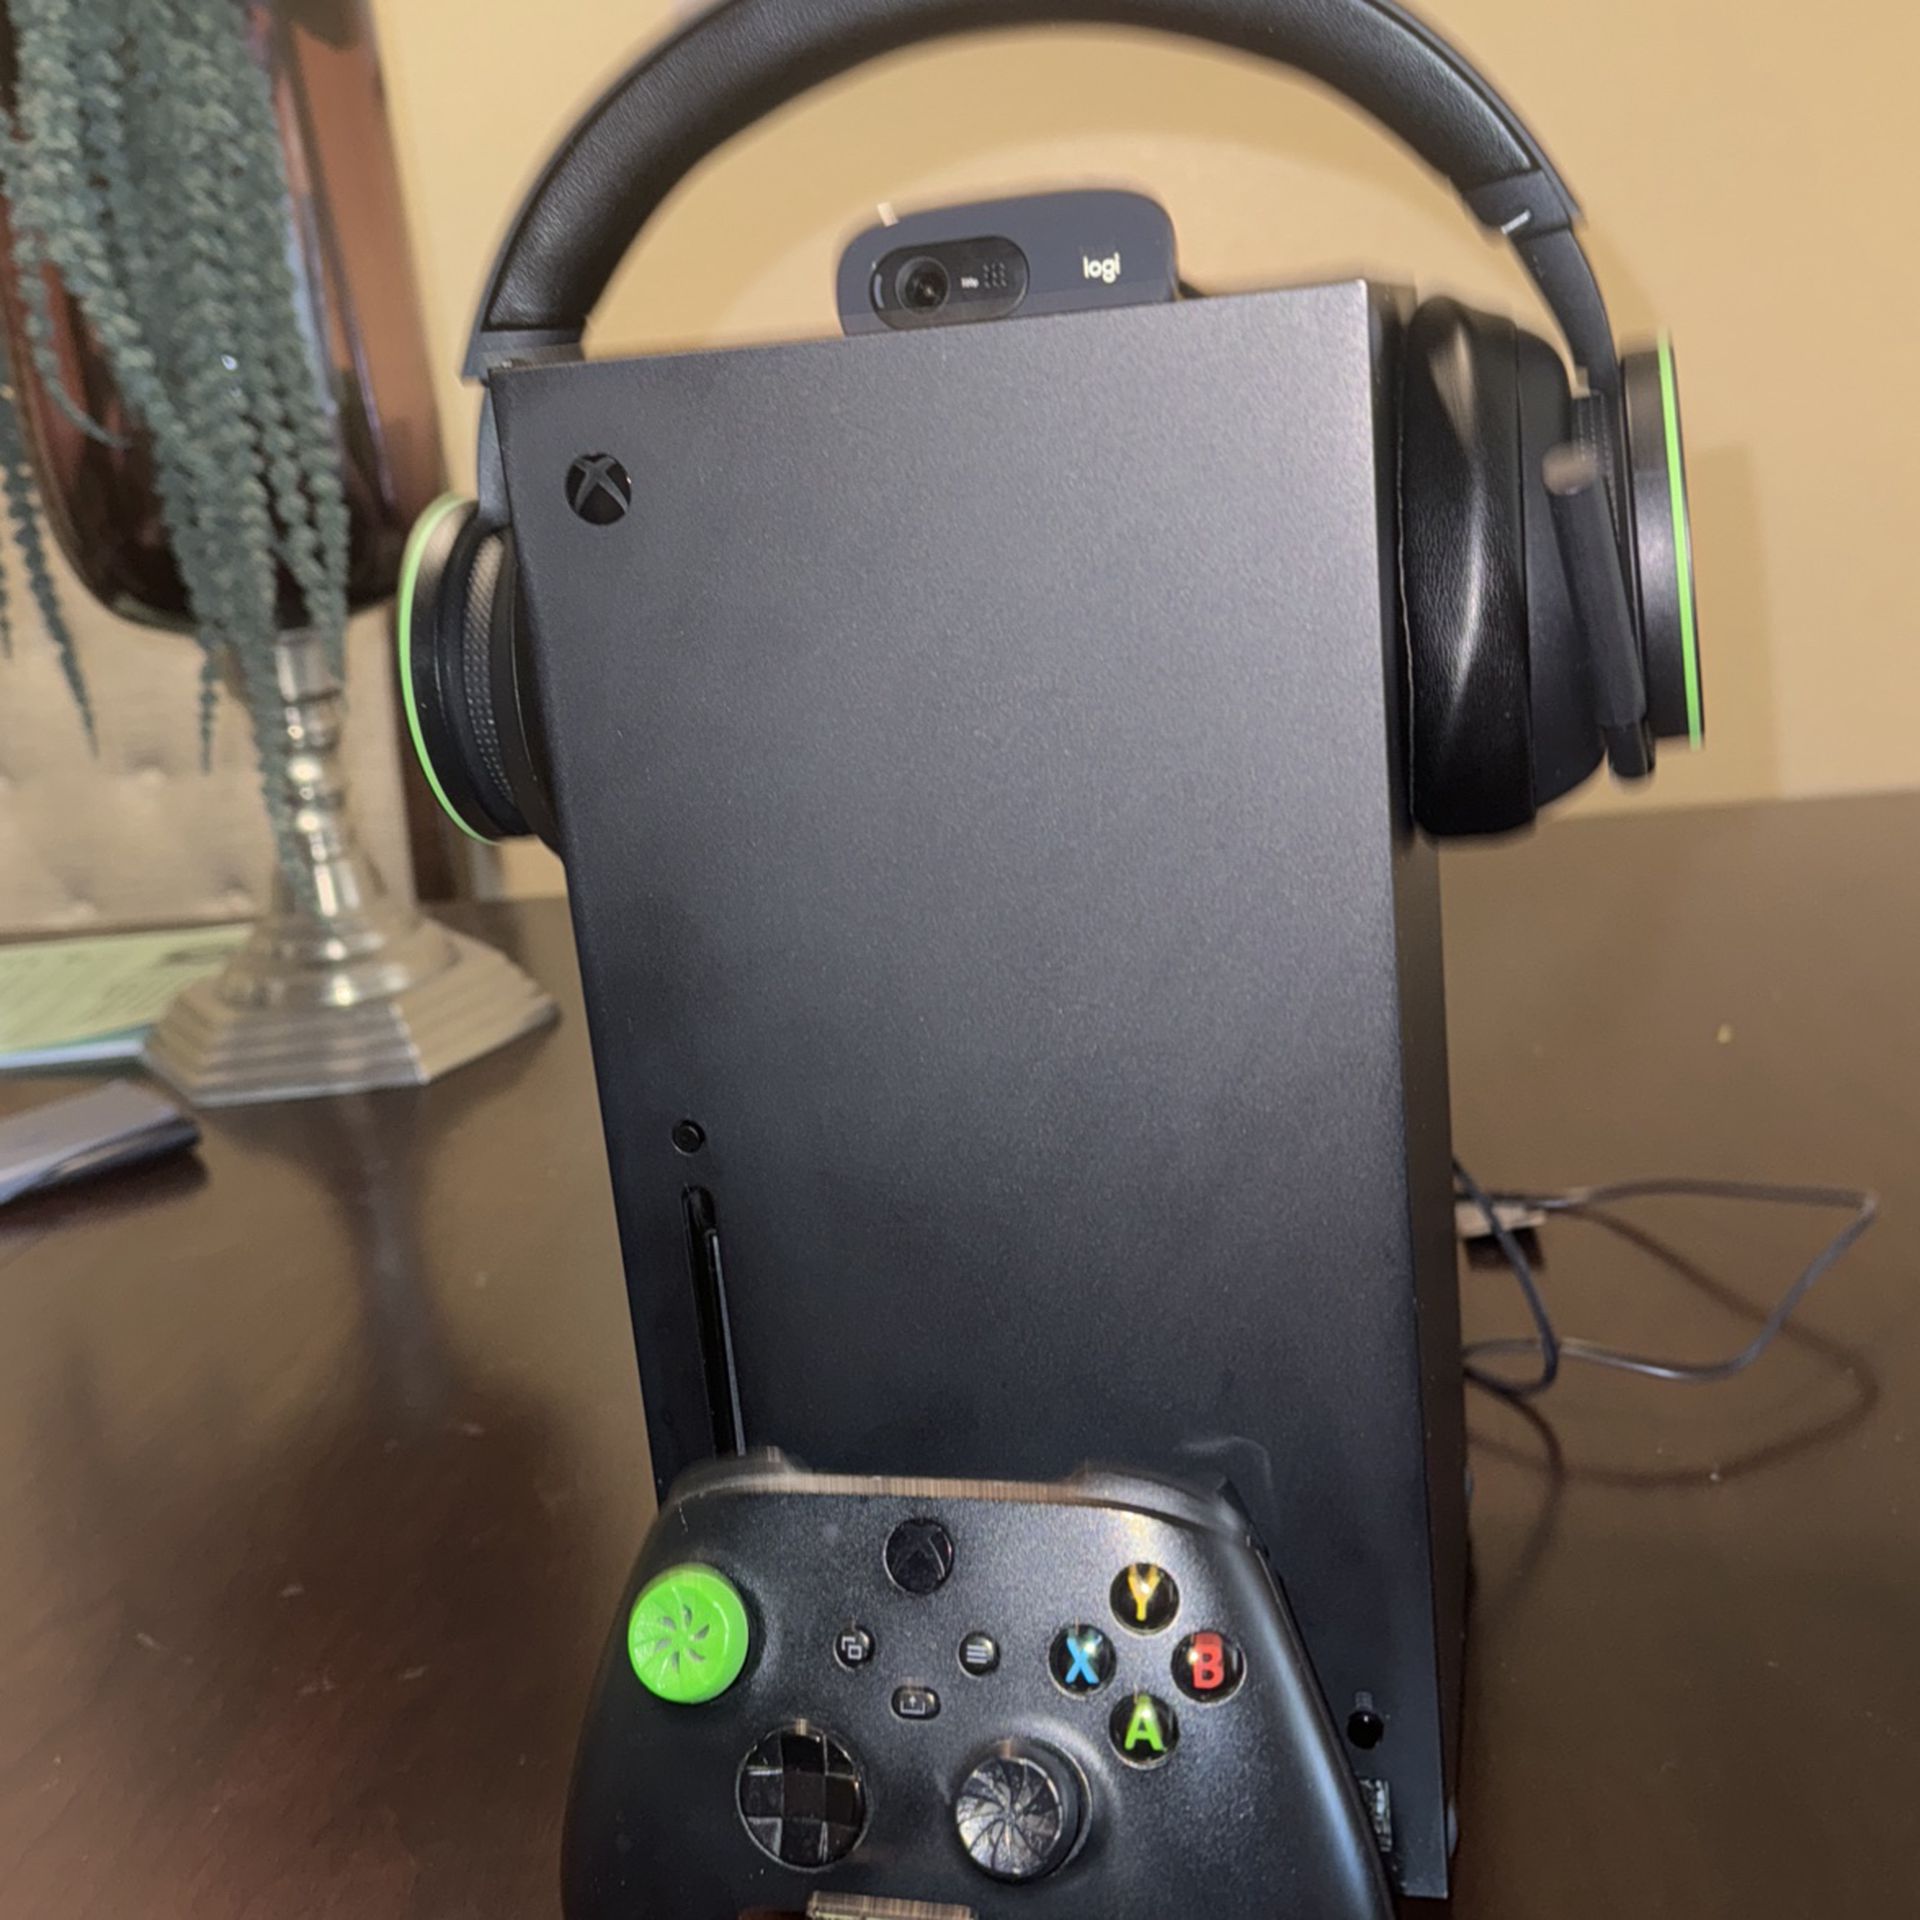 Xbox One Series X Bundle